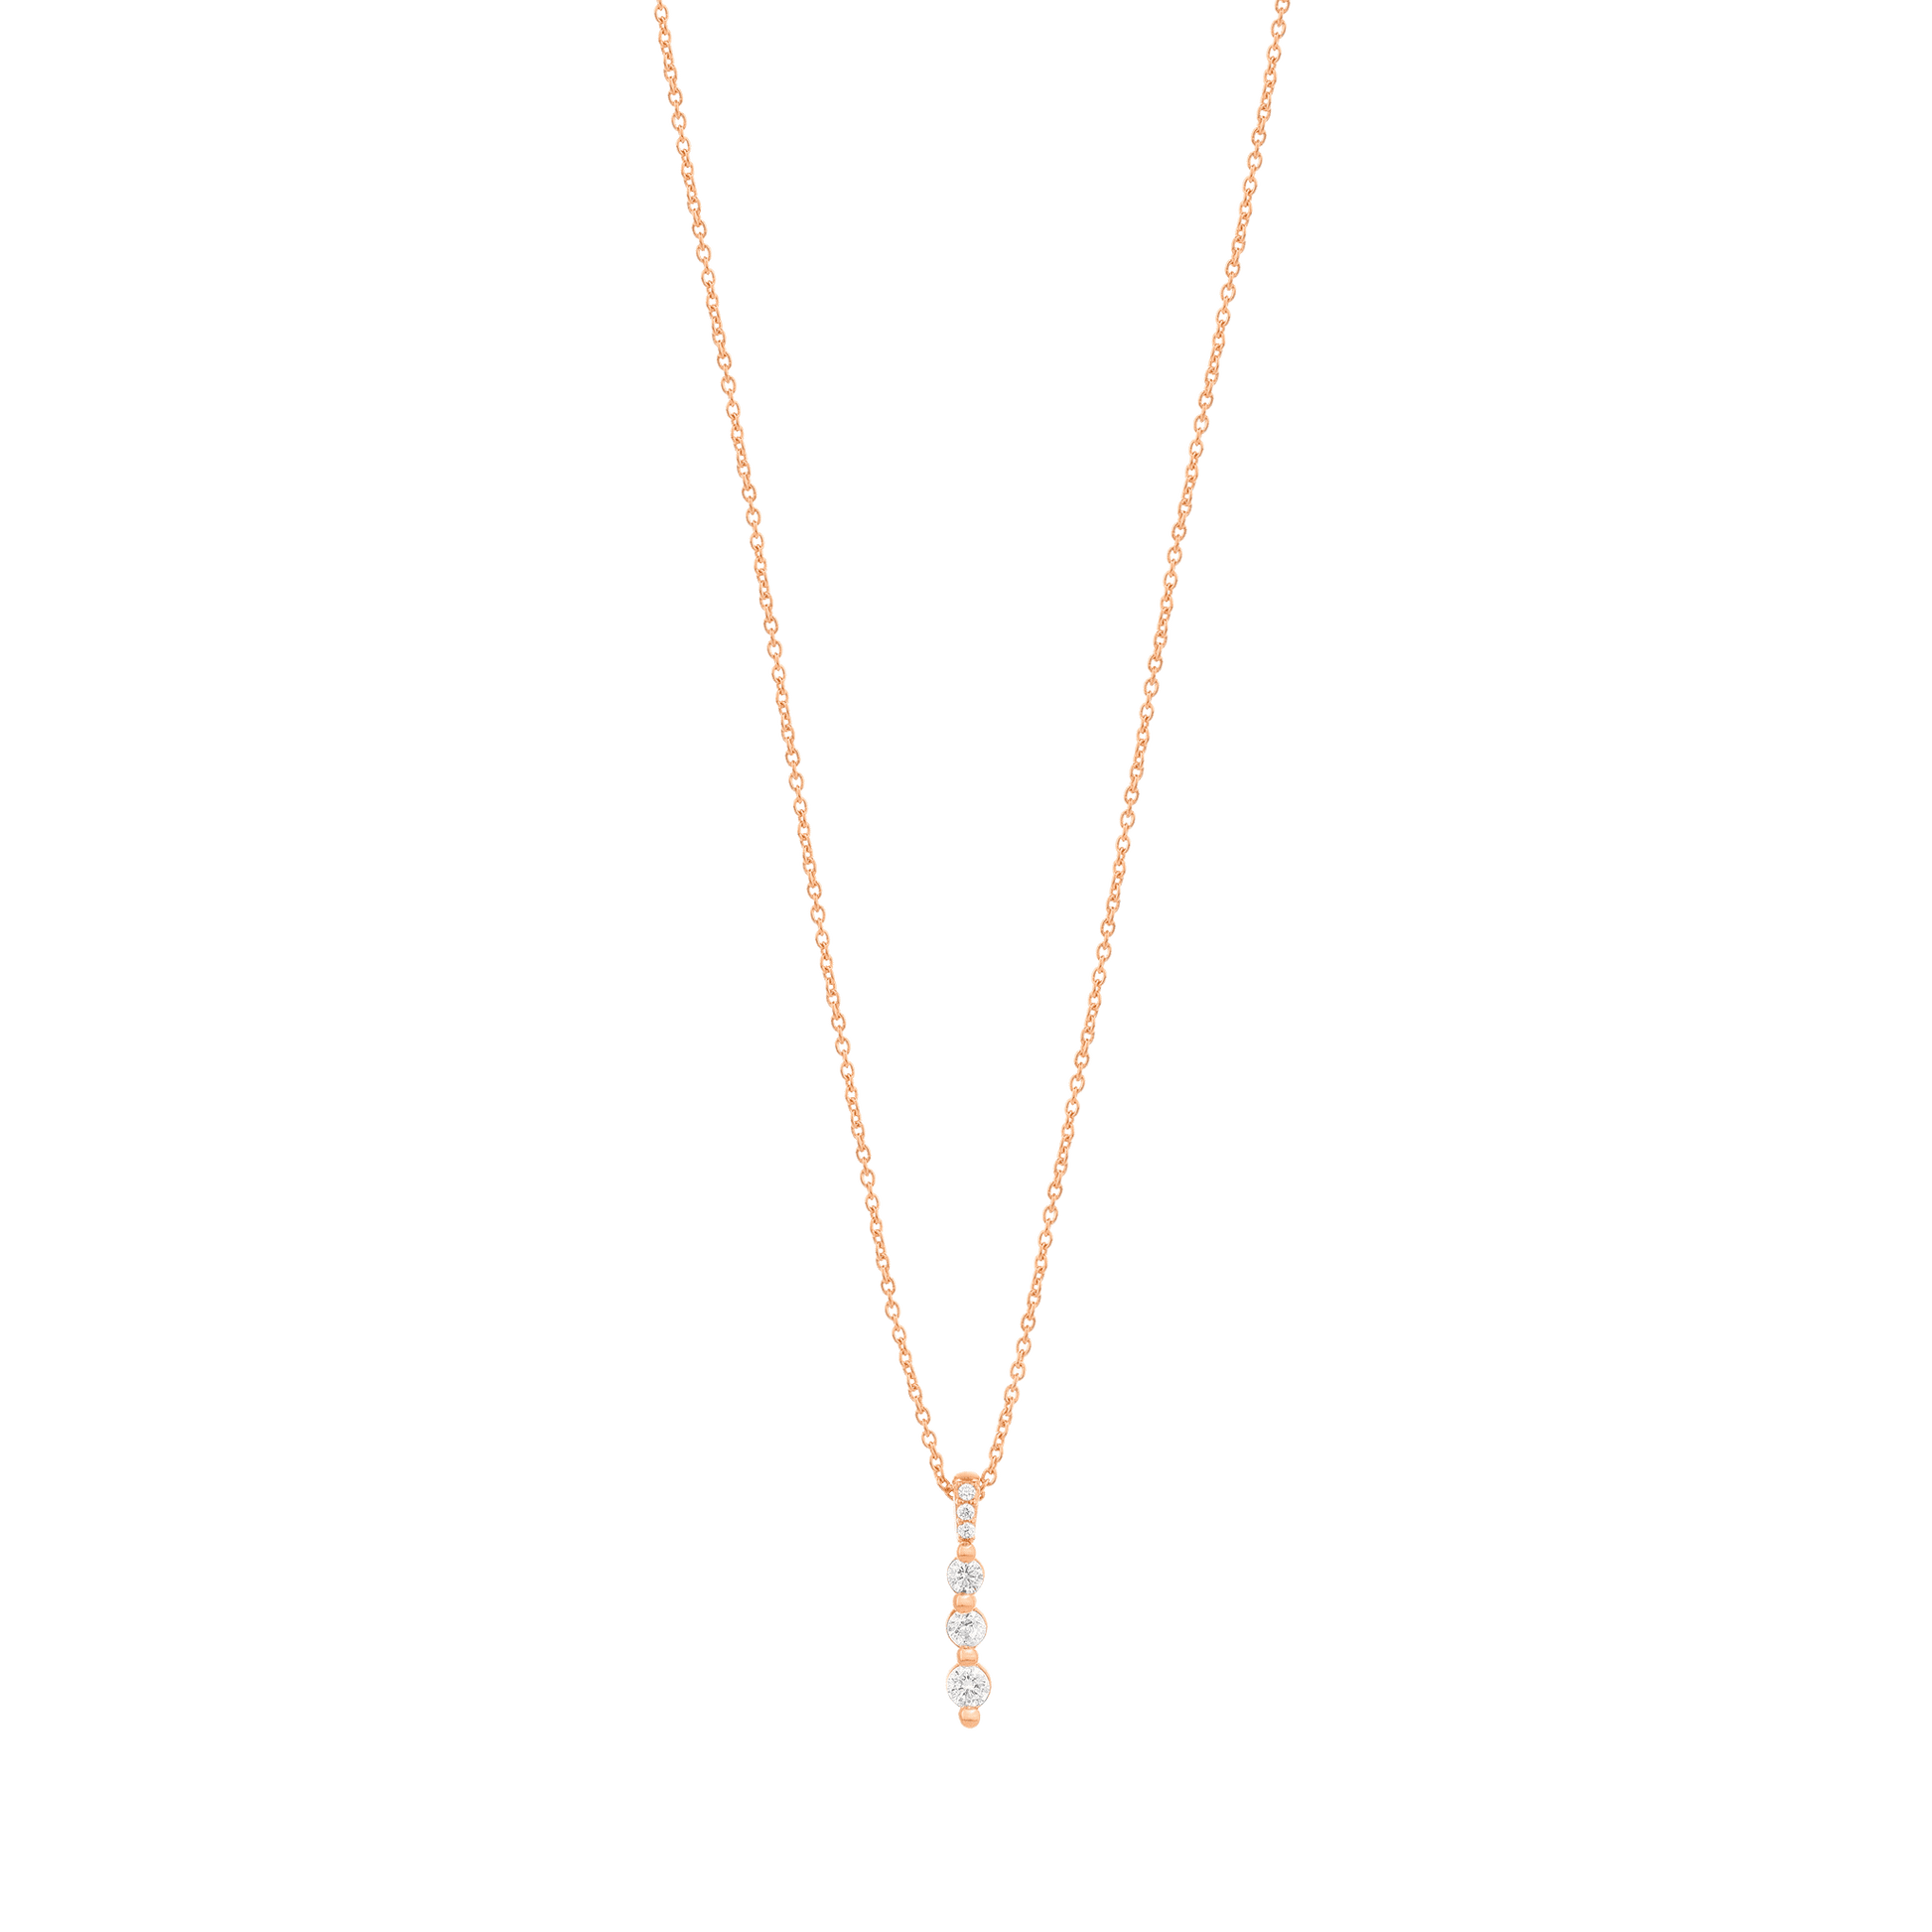 3 Diamonds Bar Necklace - 14K White Gold Necklaces magal-dev 